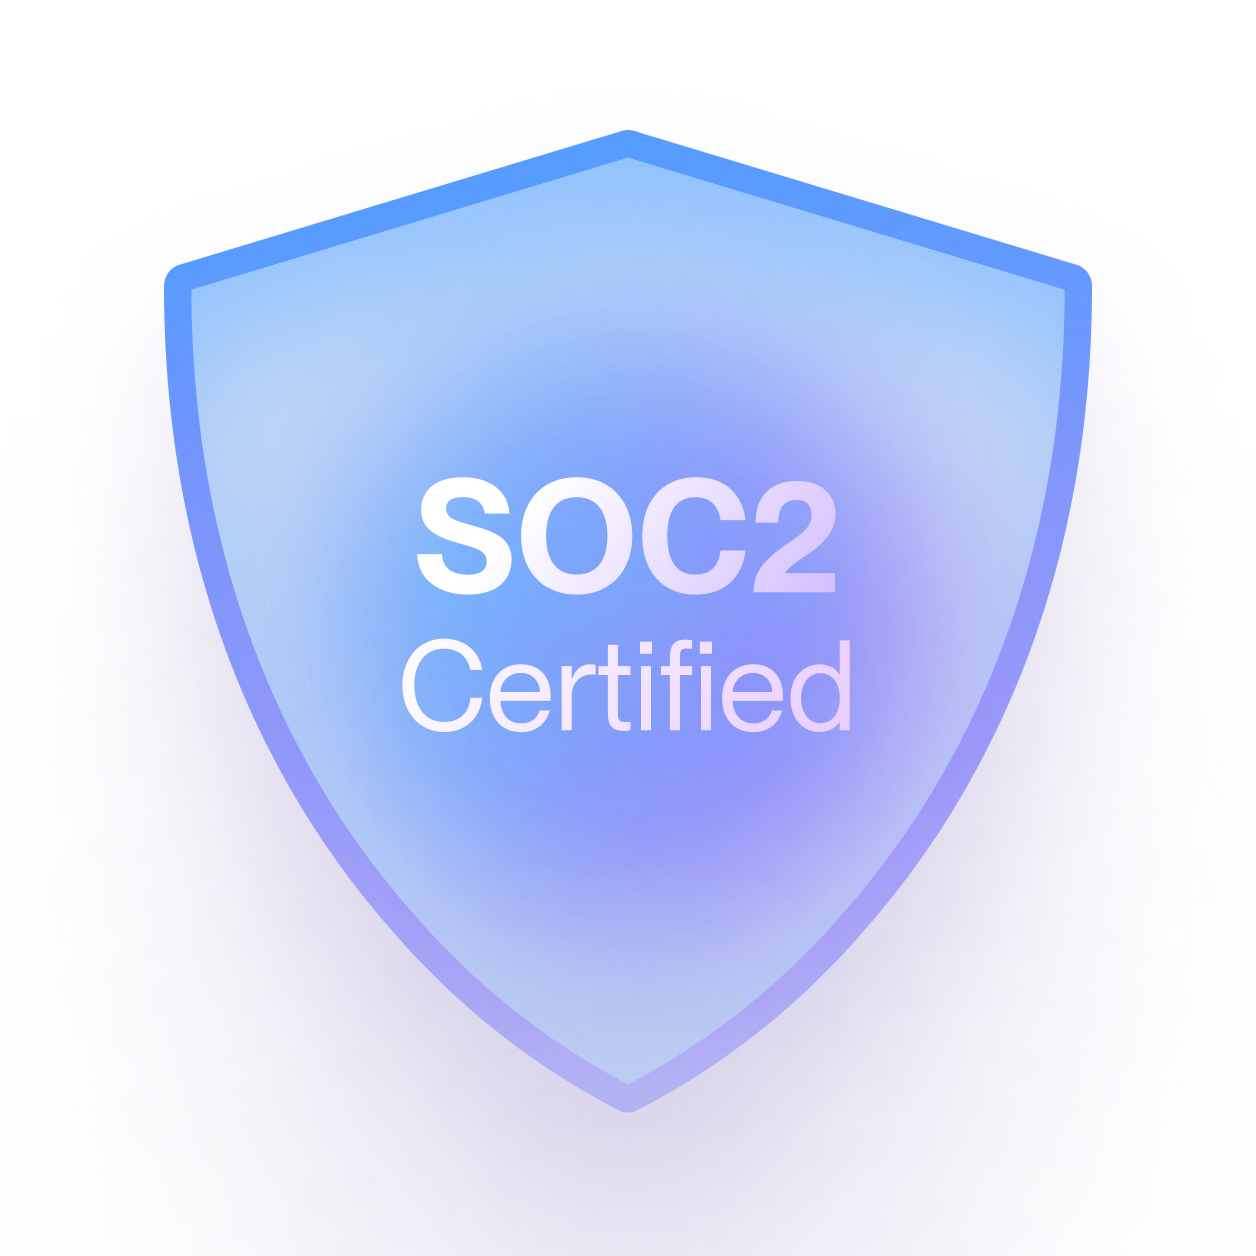 soc2 certification